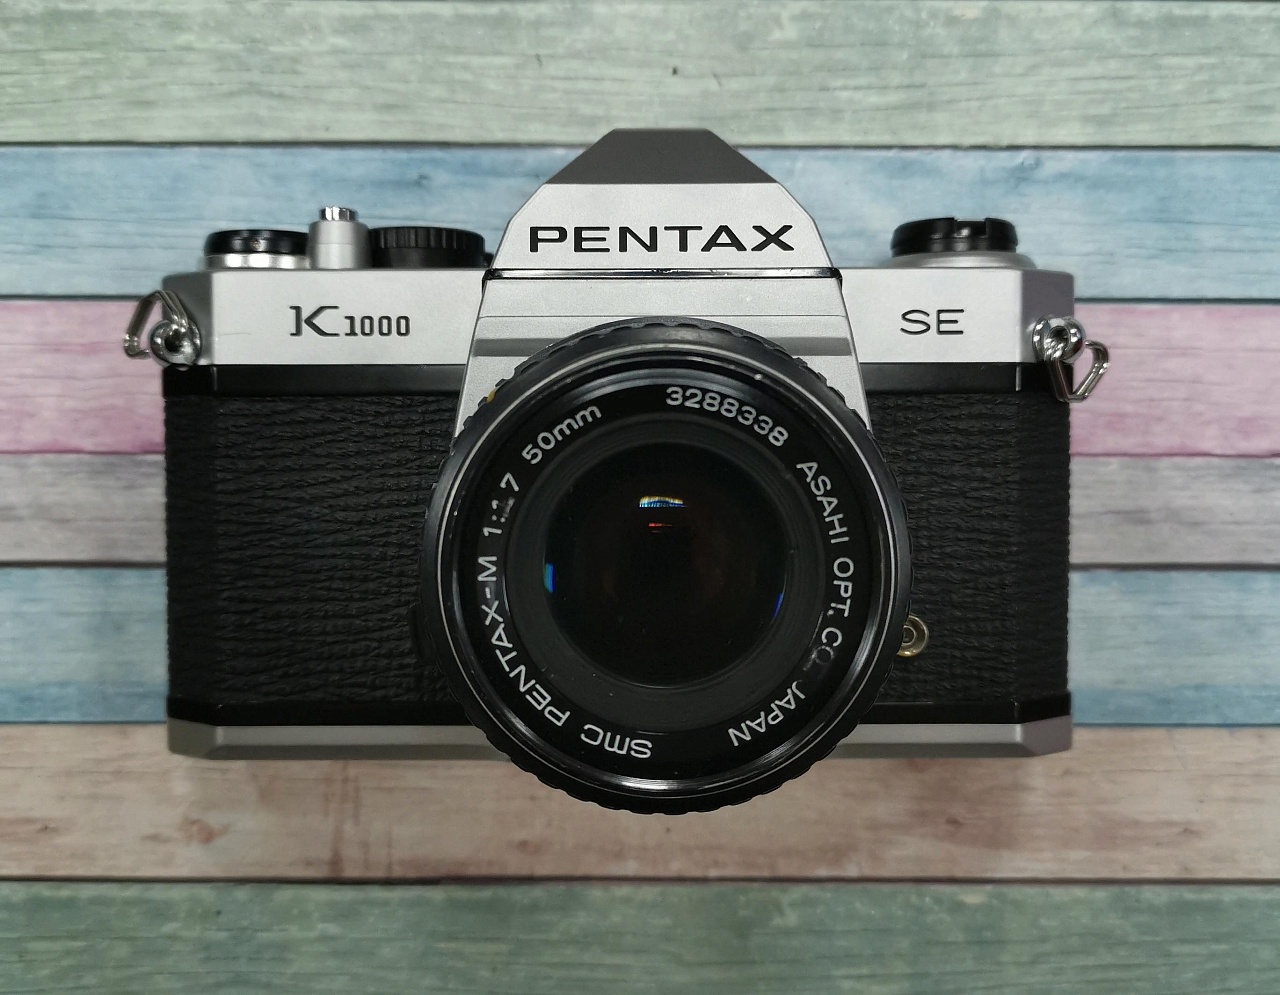 Pentax K1000 + Asahi smc pentax-m 50 mm f/1.7 фото №1